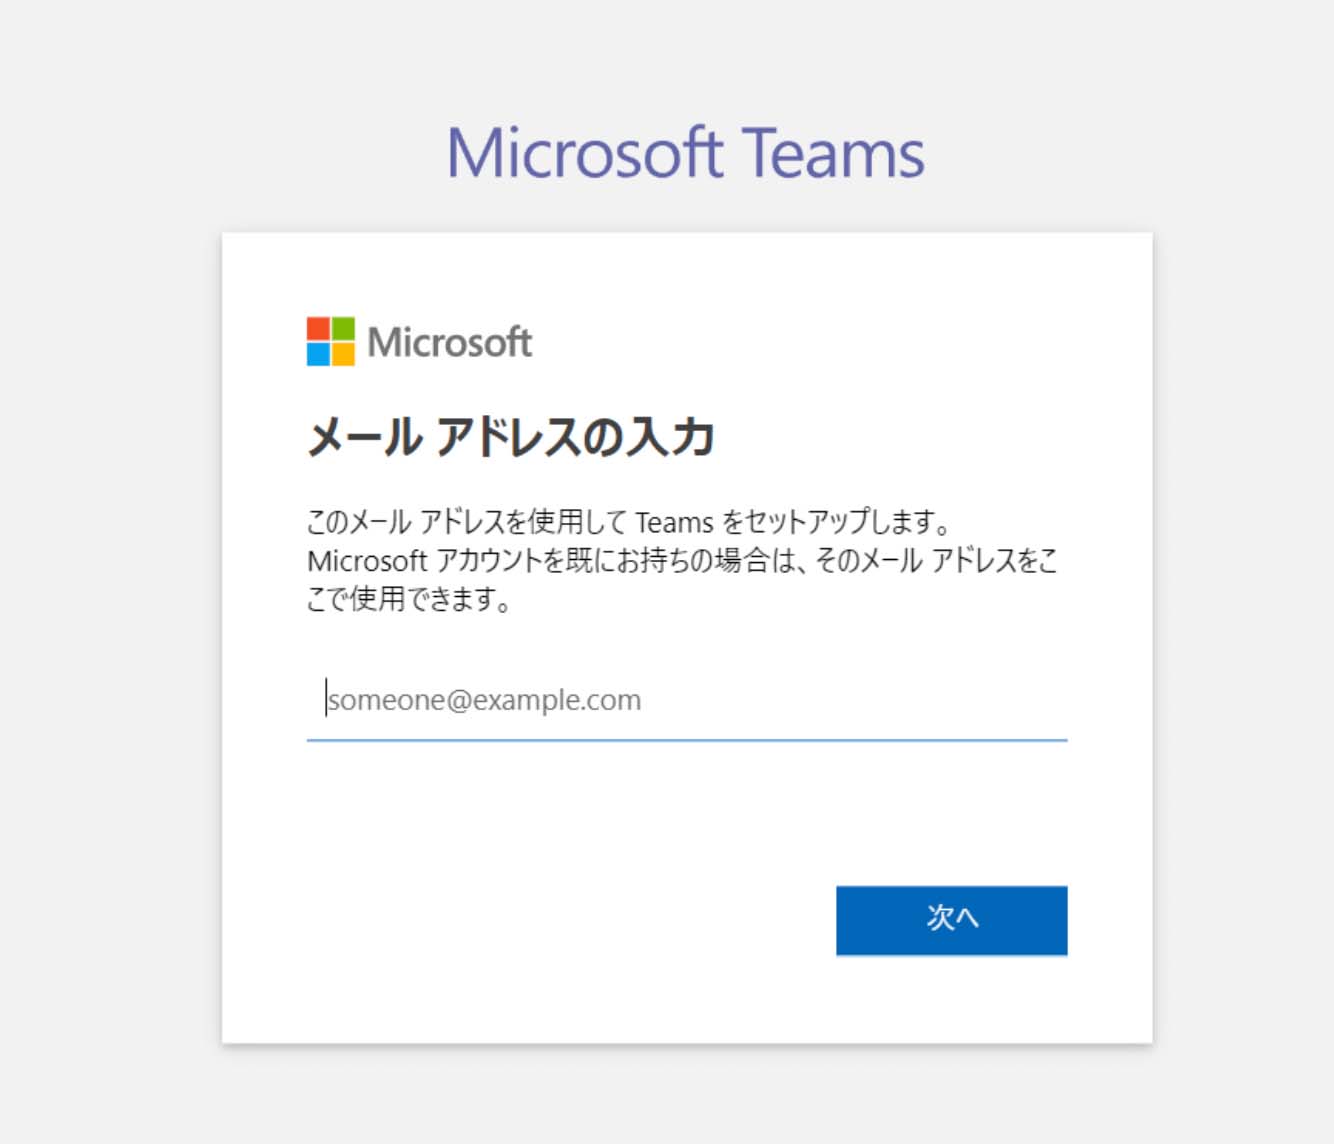 Microsoft Teamsとは